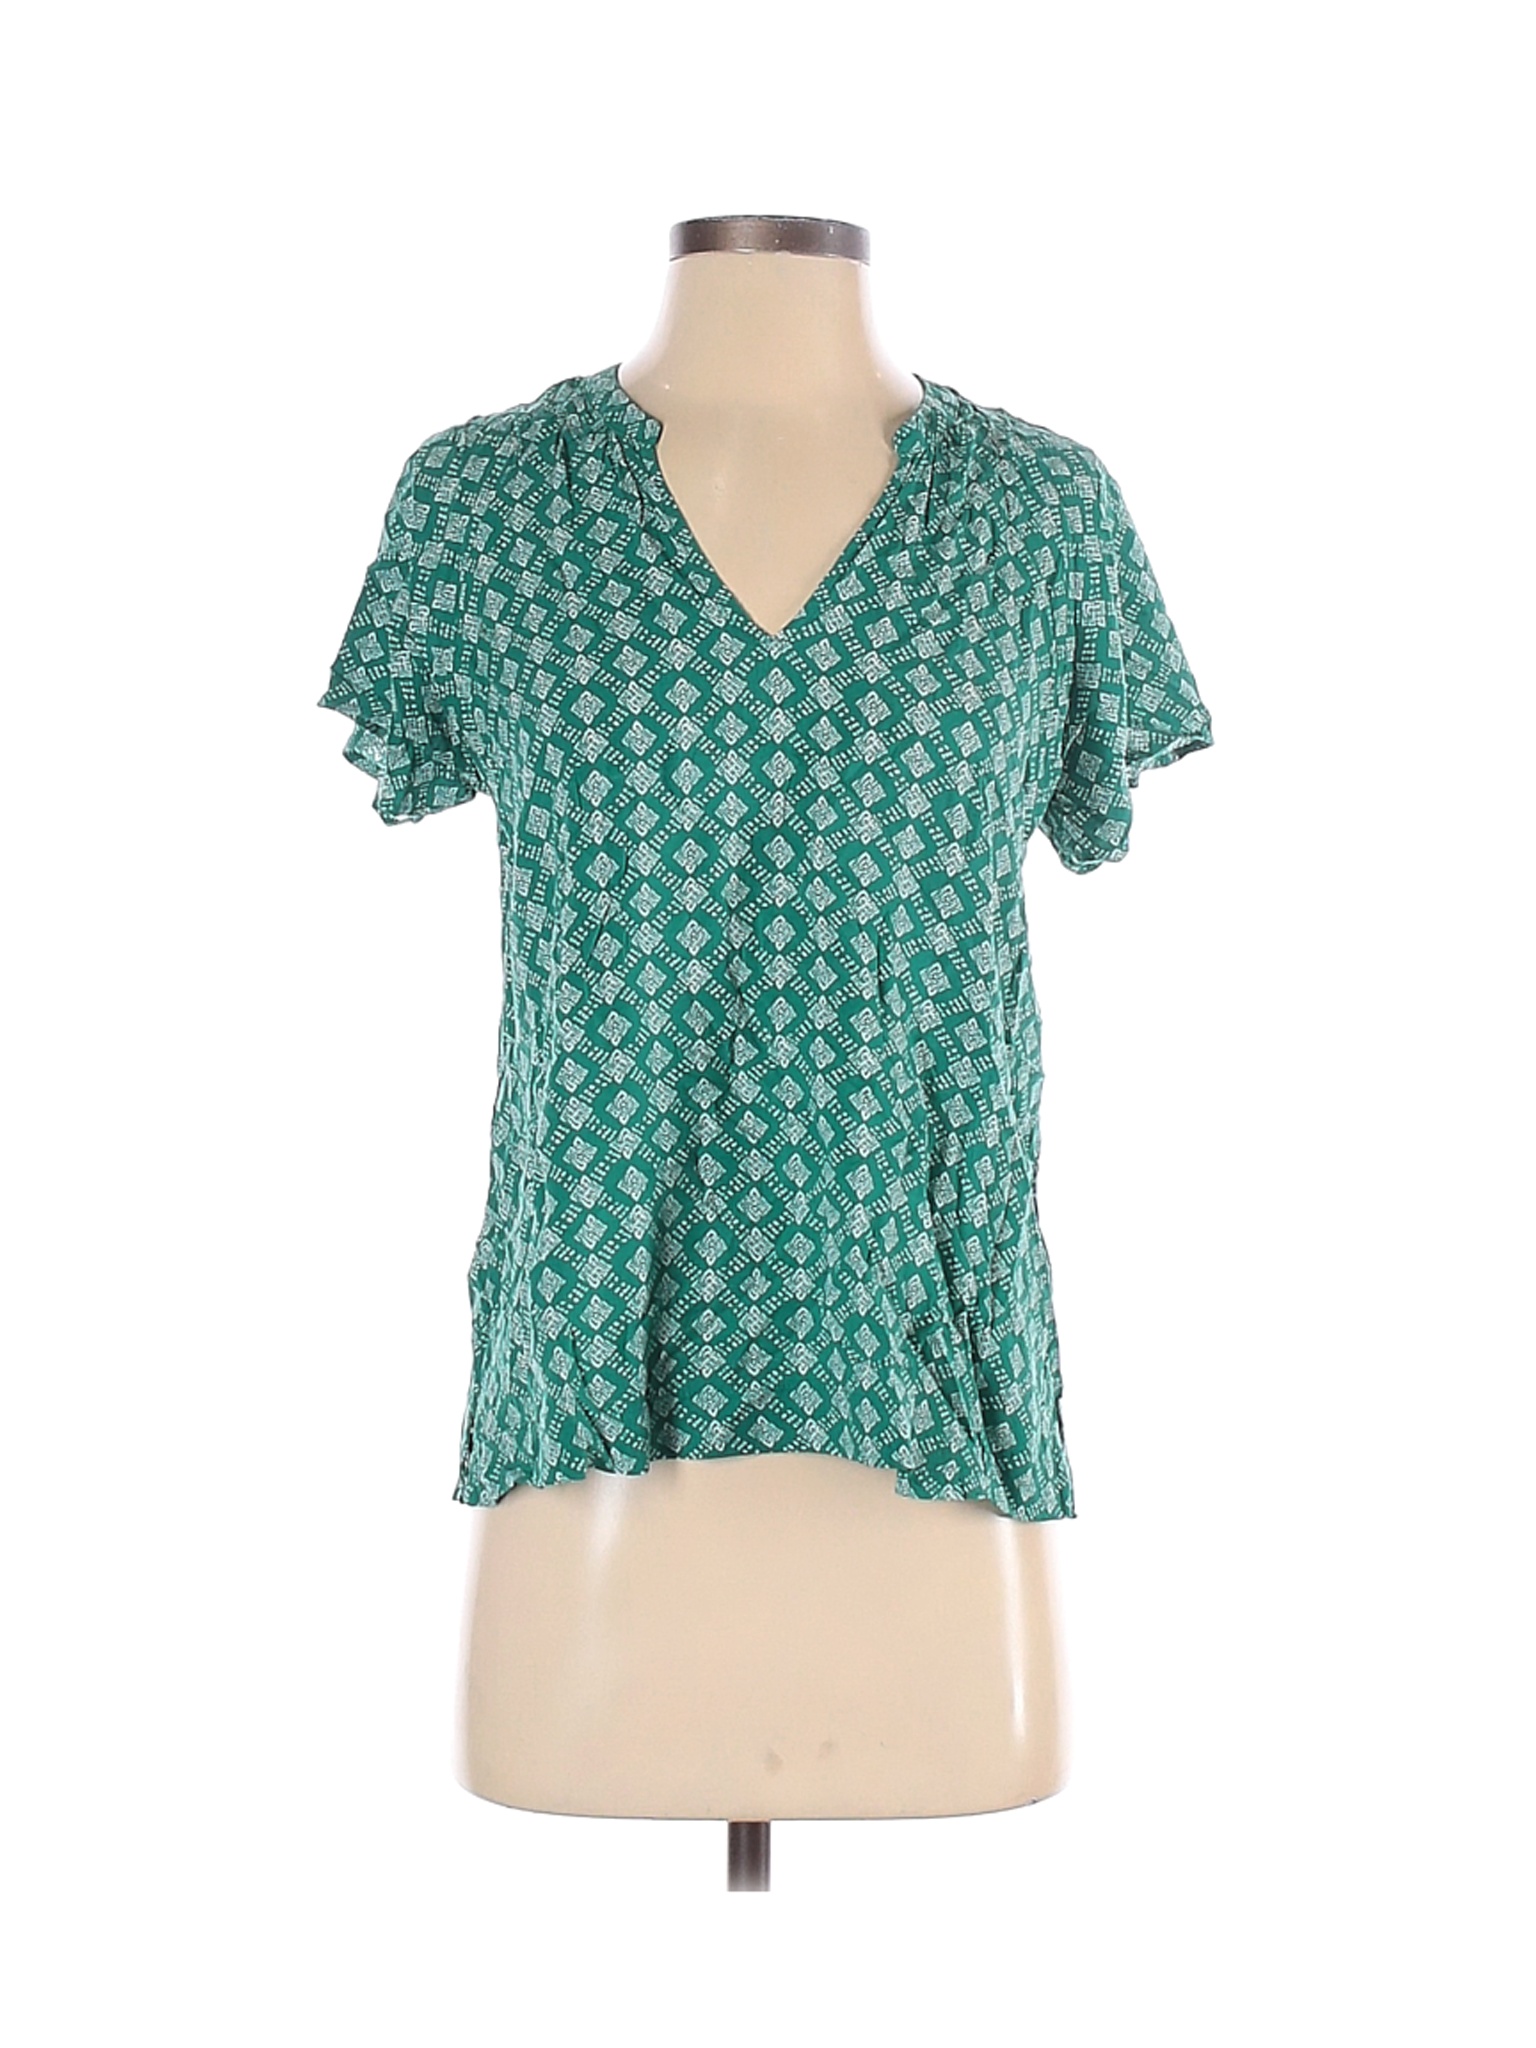 Old Navy Women Green Short Sleeve Blouse S | eBay